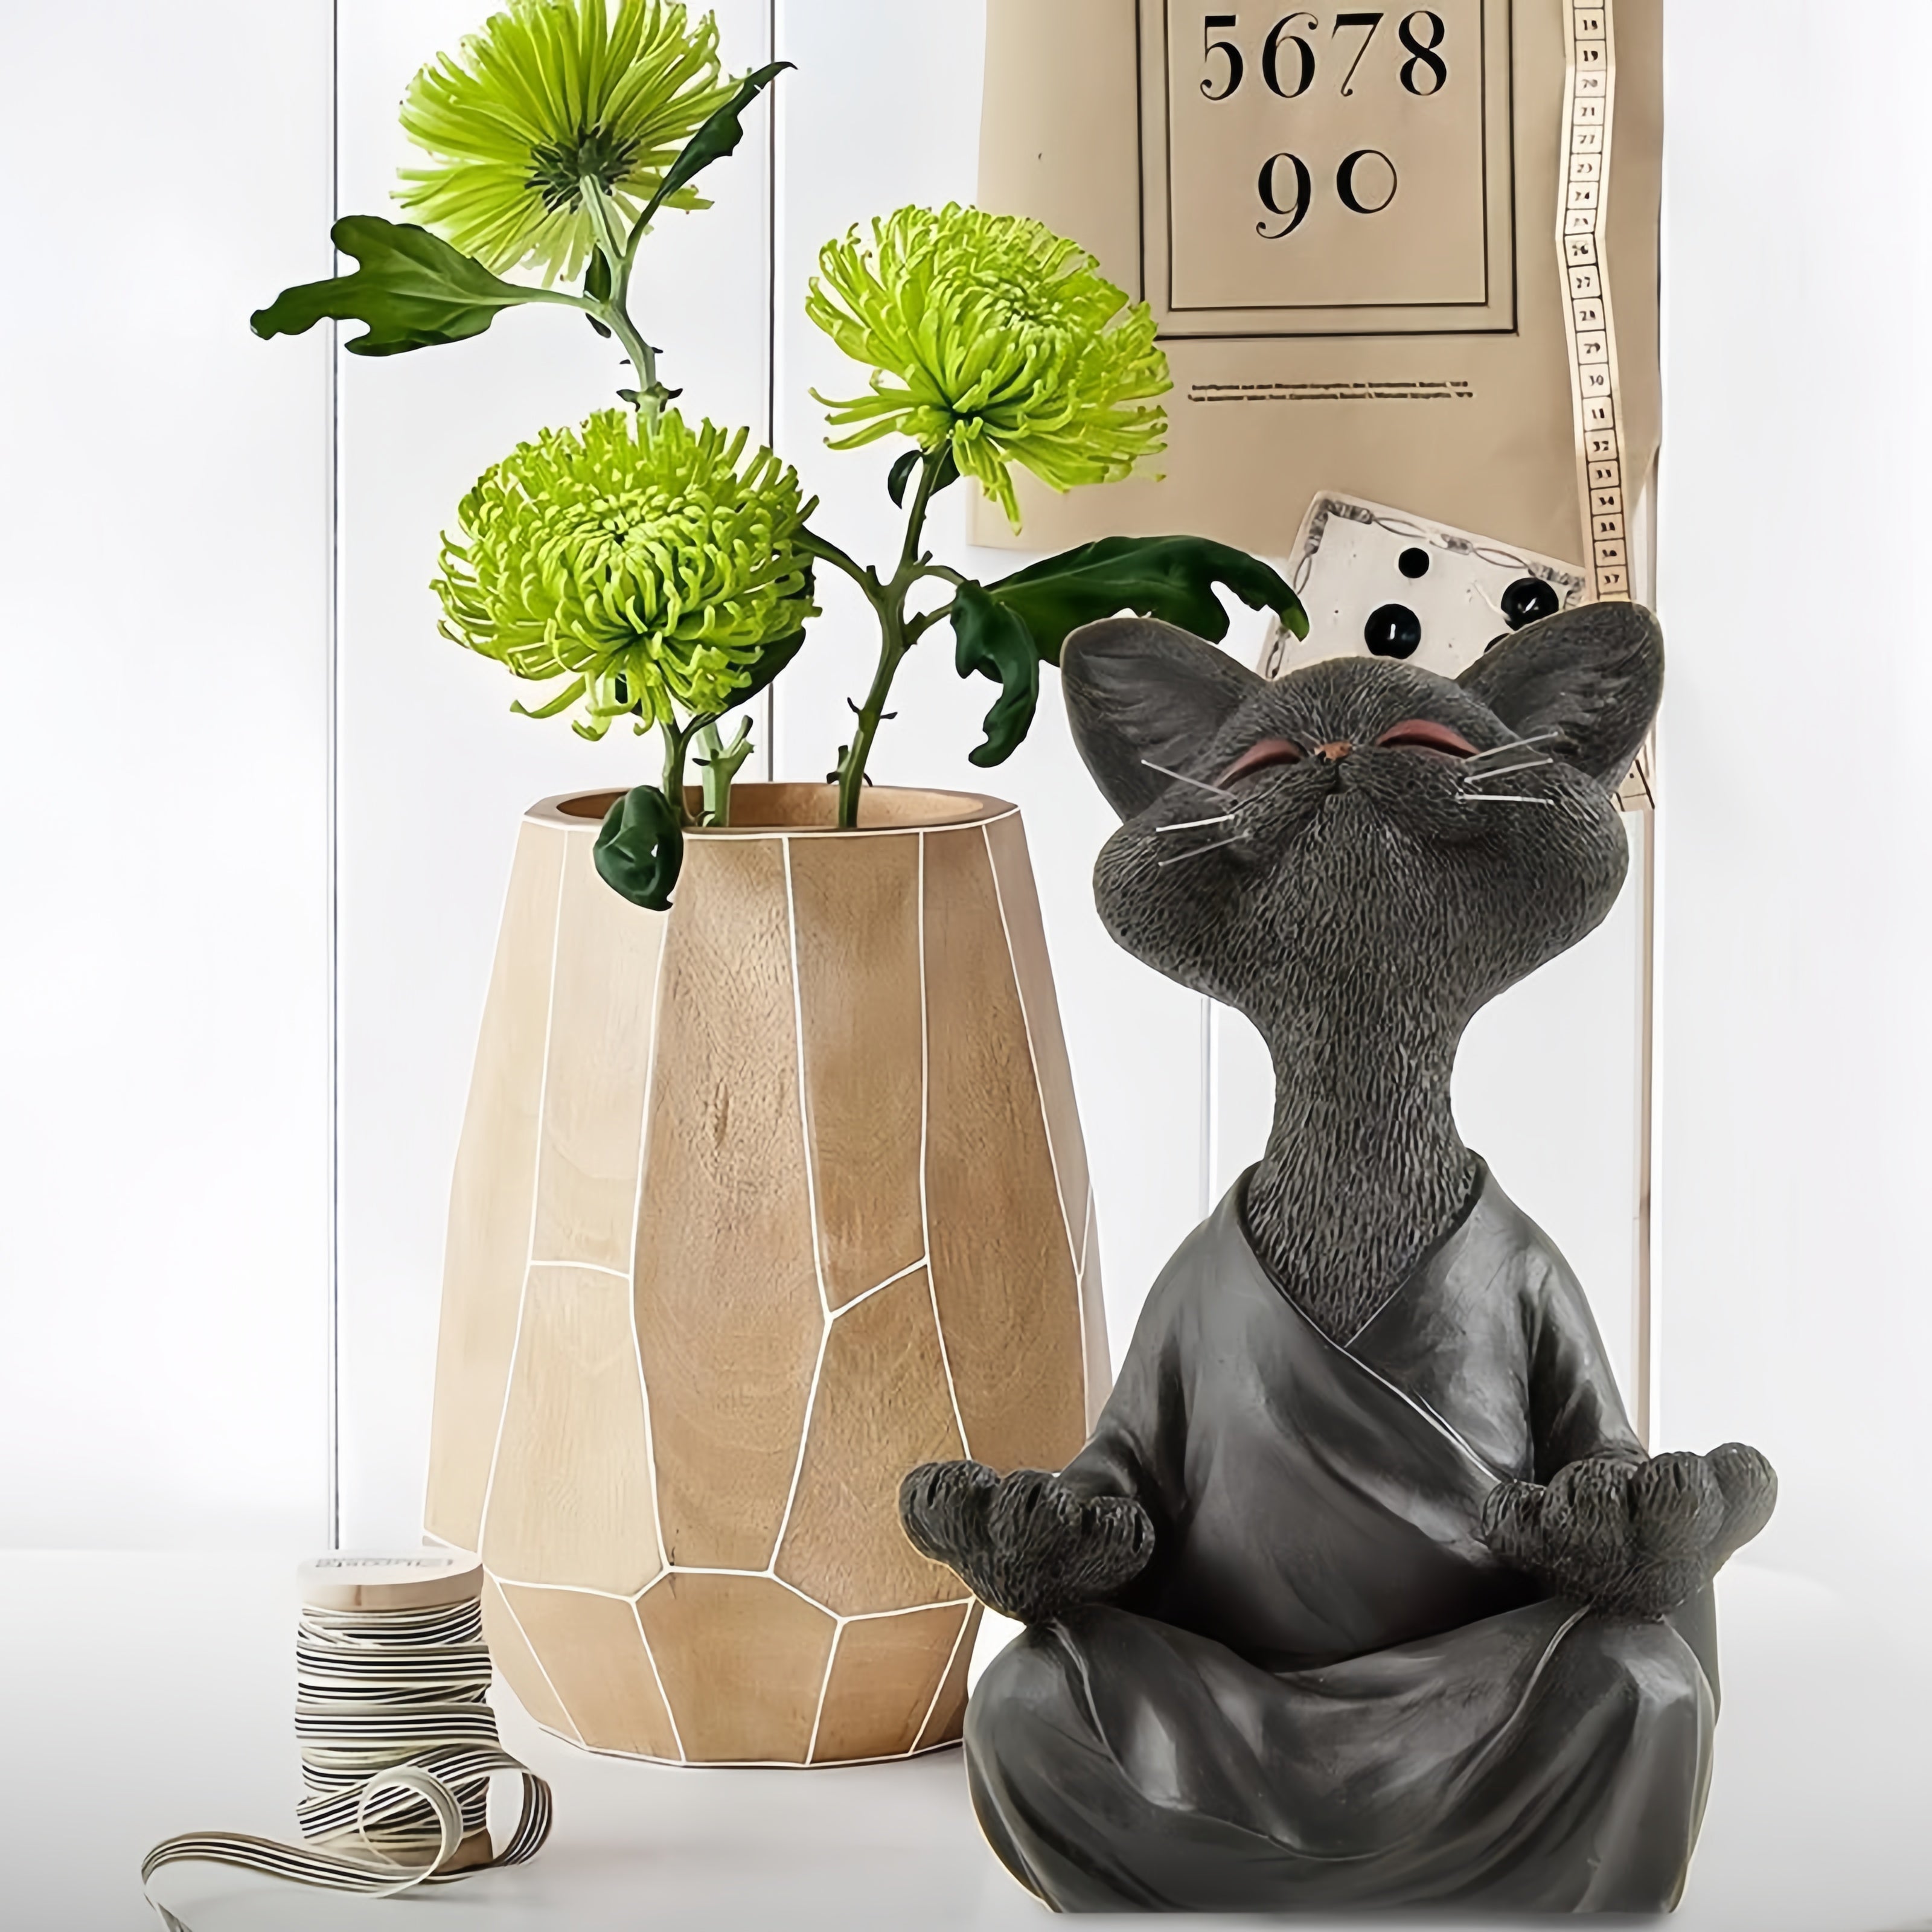 Meditation cat statue beside flowers